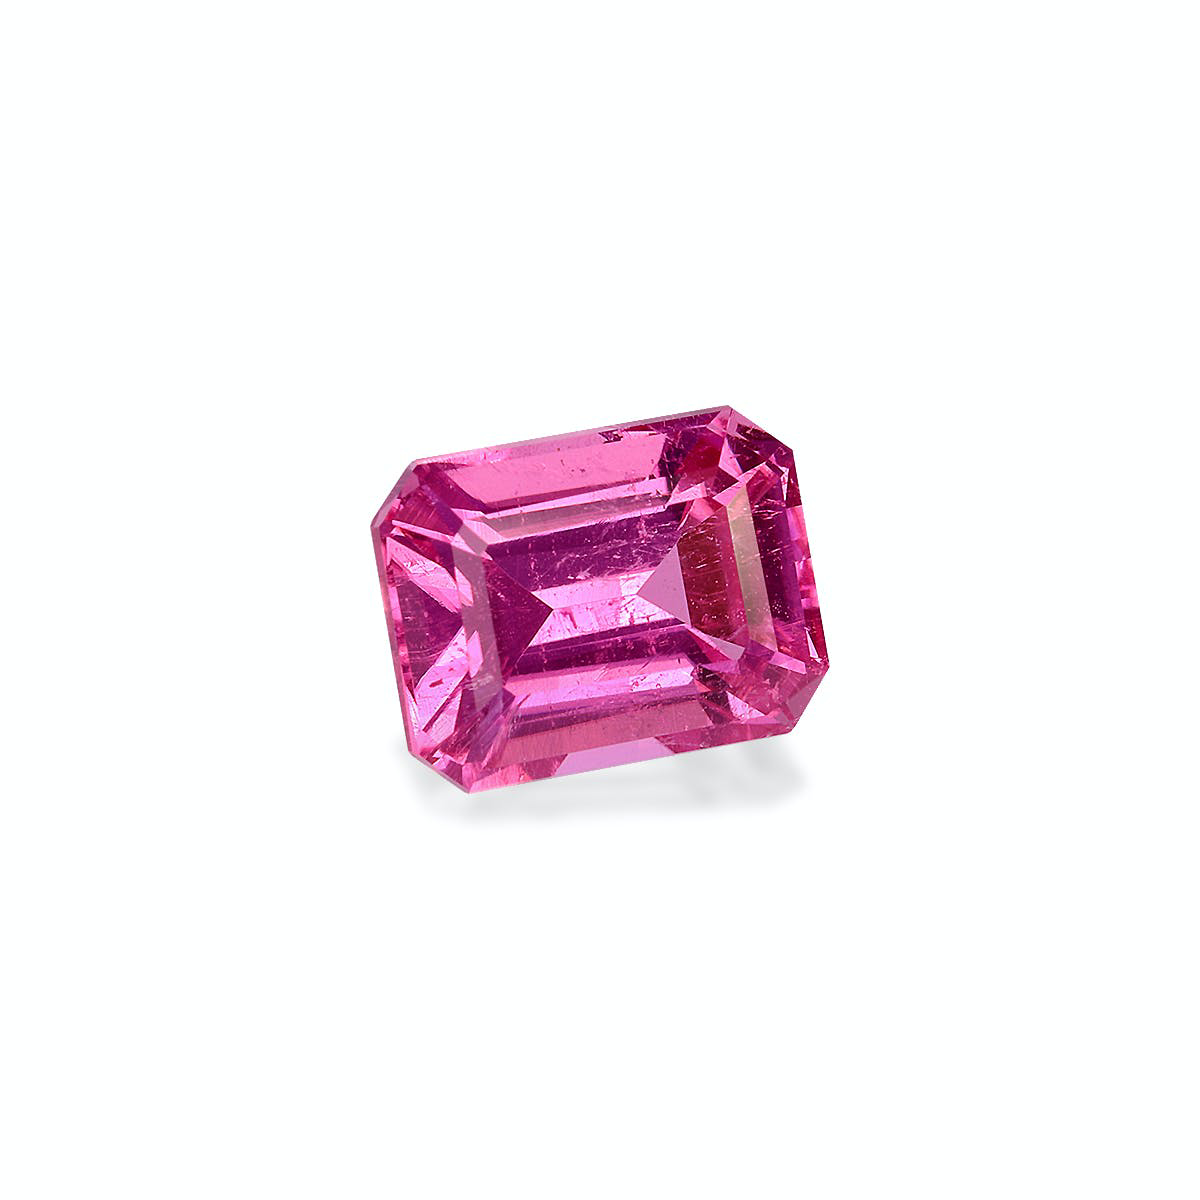 Picture of Fuscia Pink Rubellite Tourmaline 2.04ct - 8x6mm (RL1236)